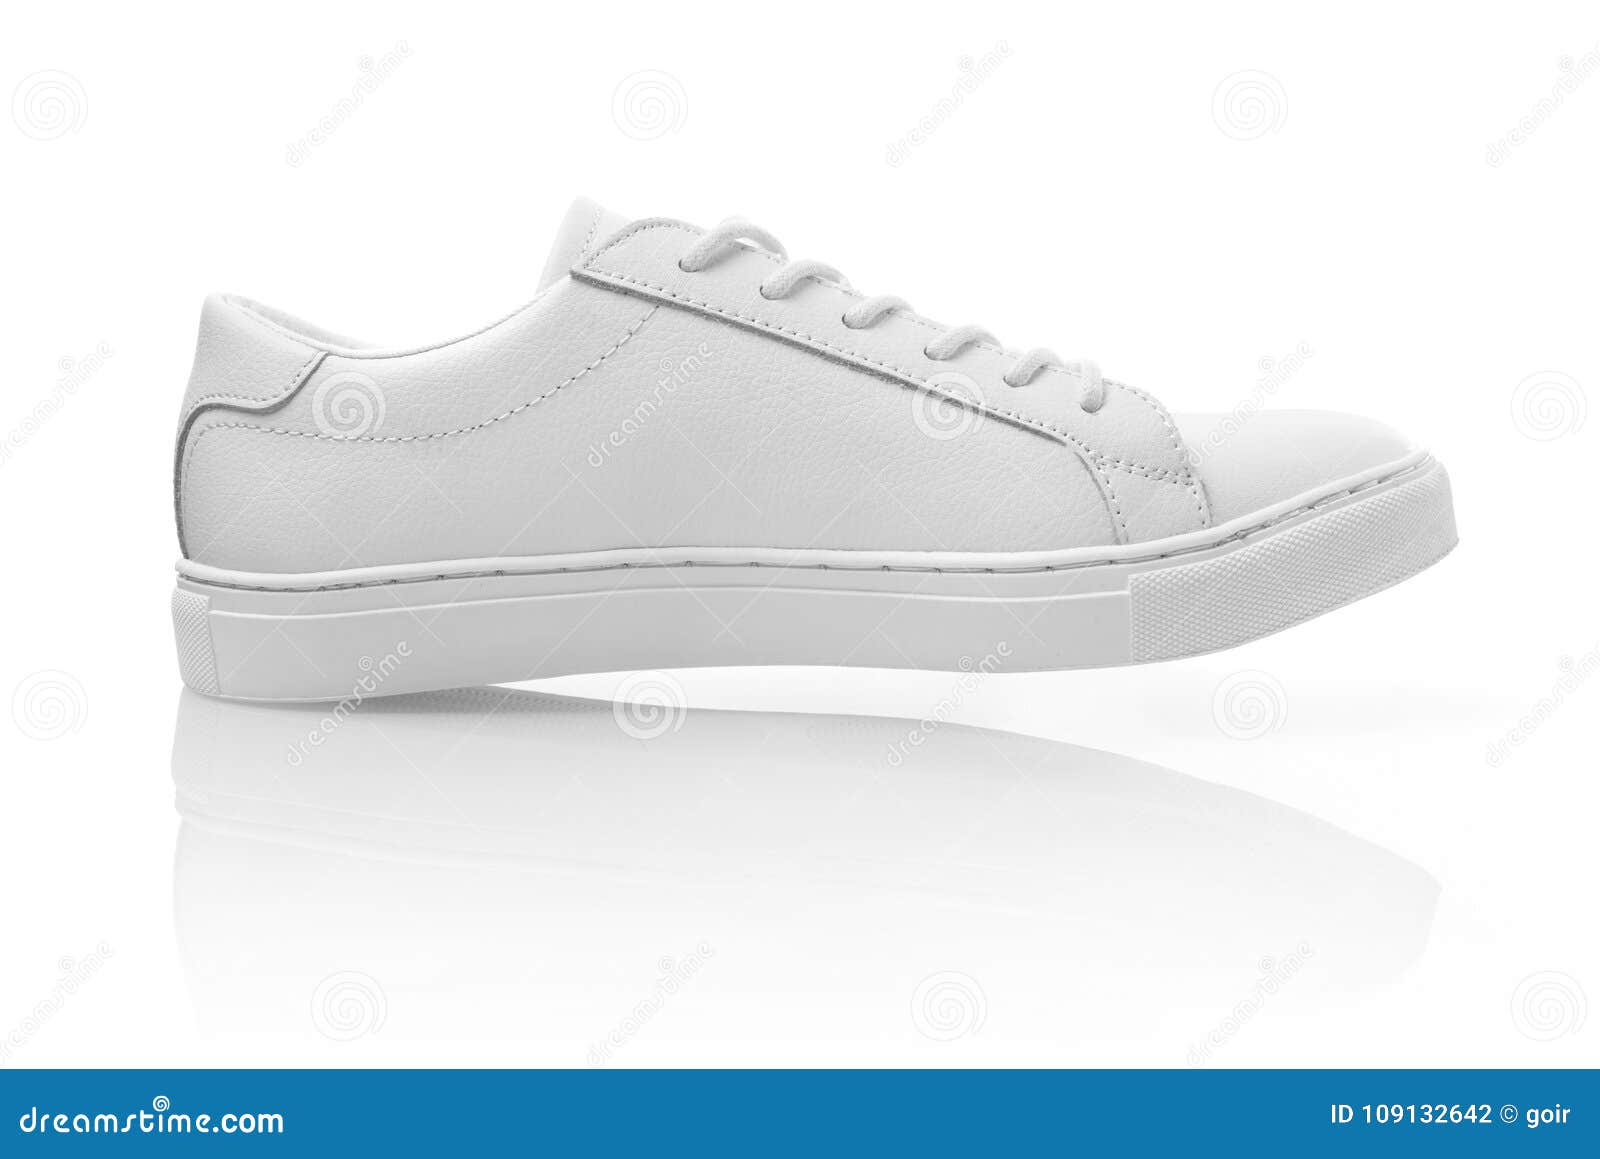 Walking sneaker stock photo. Image of shoelace, motion - 109132642